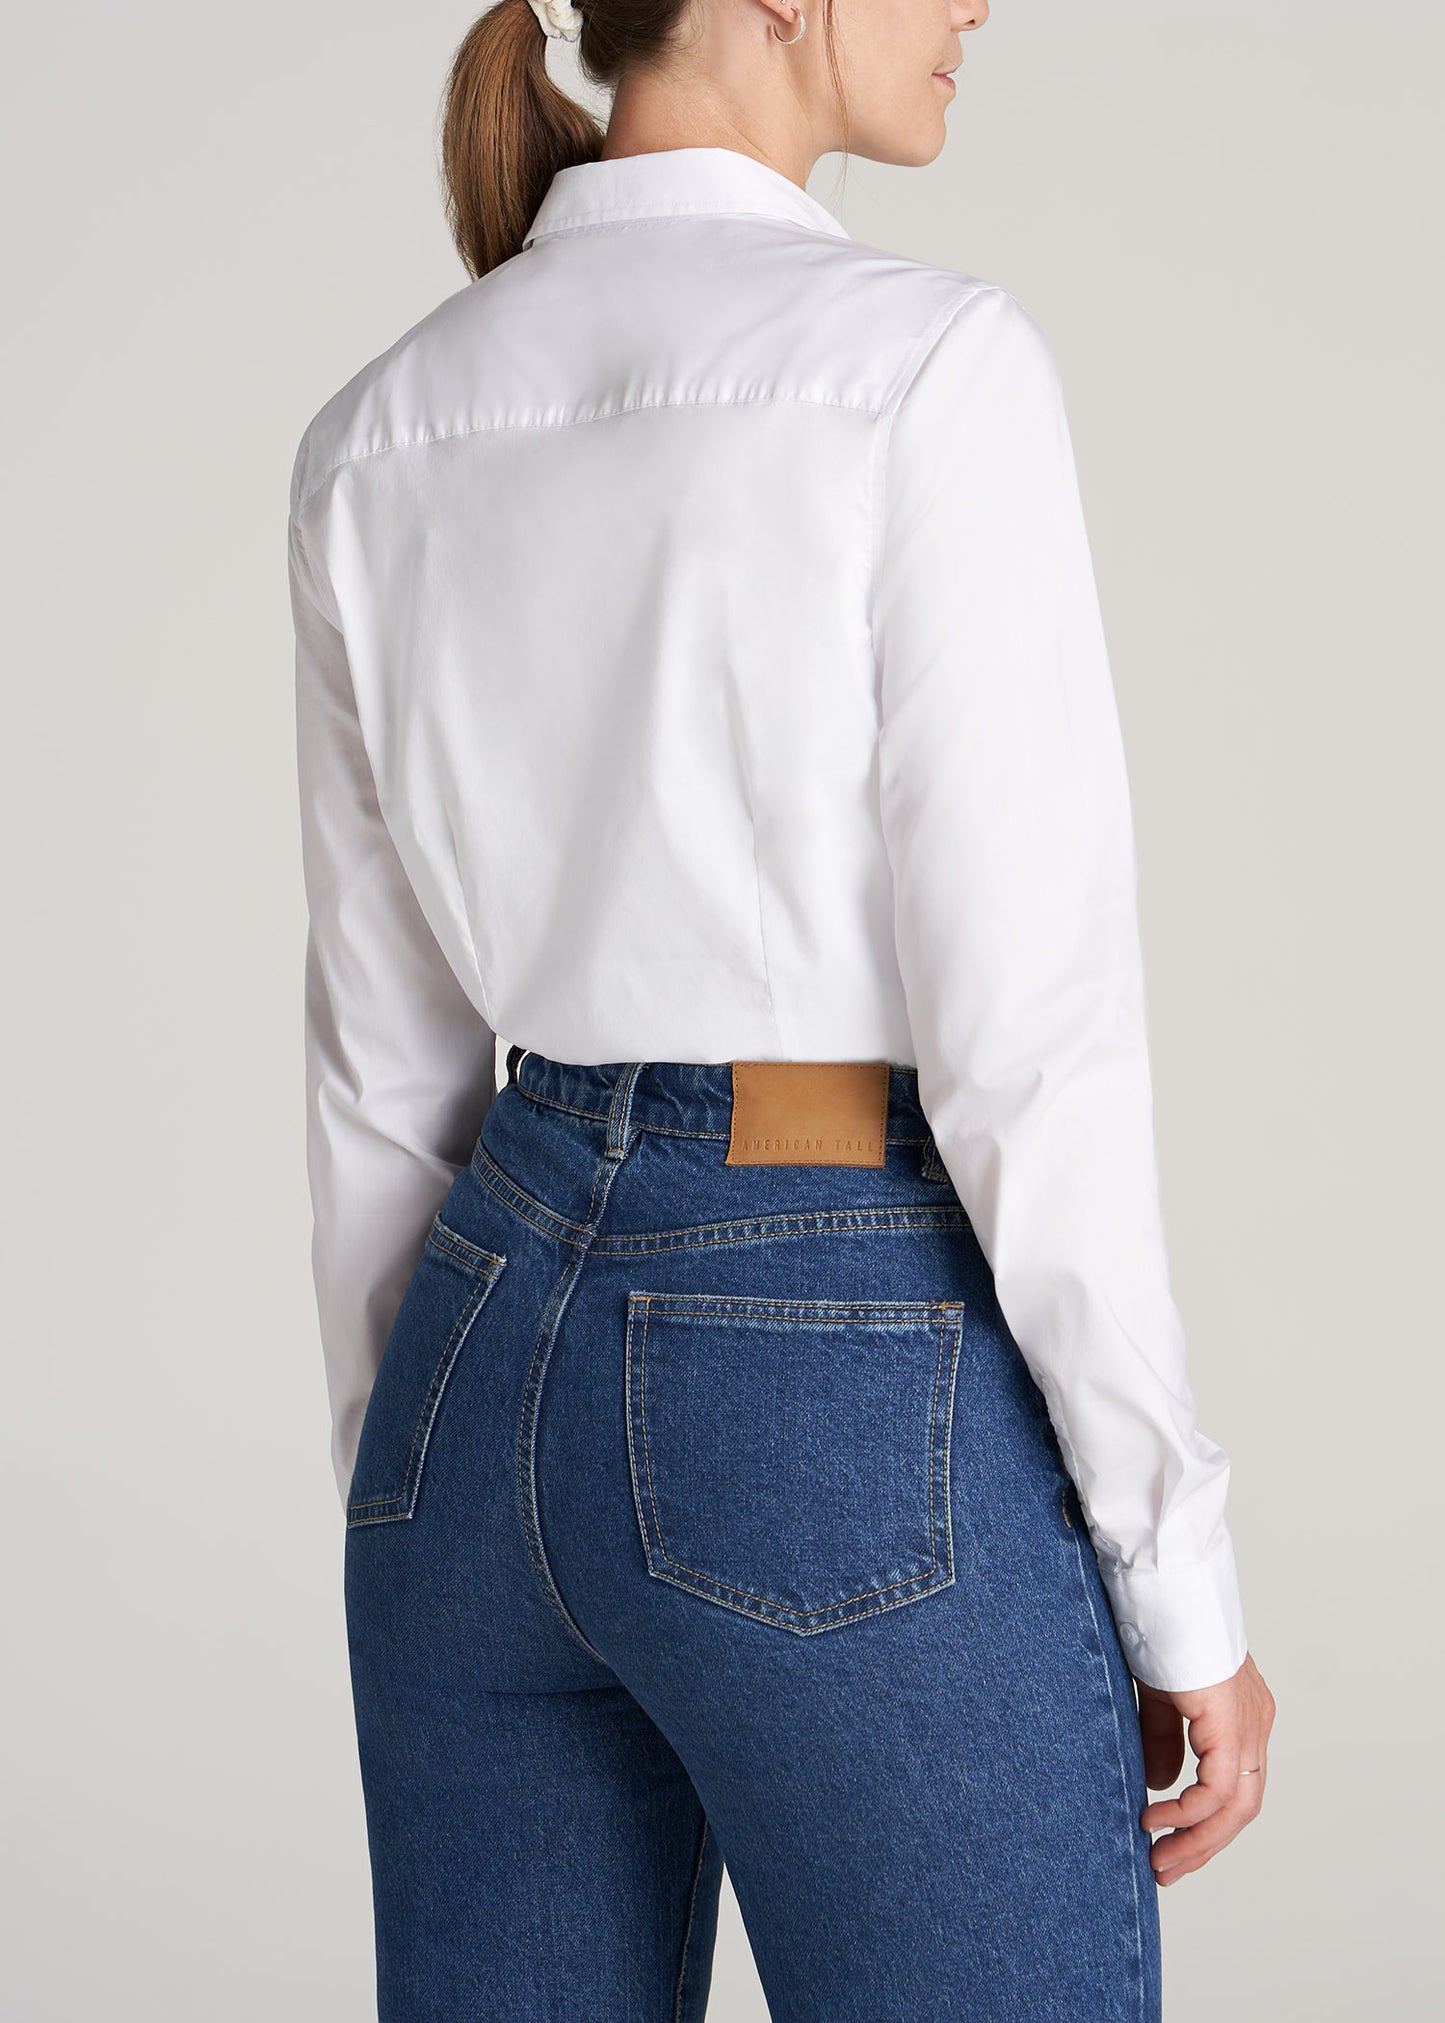        American-Tall-Women-Button-Up-Dress-Shirt-White-back